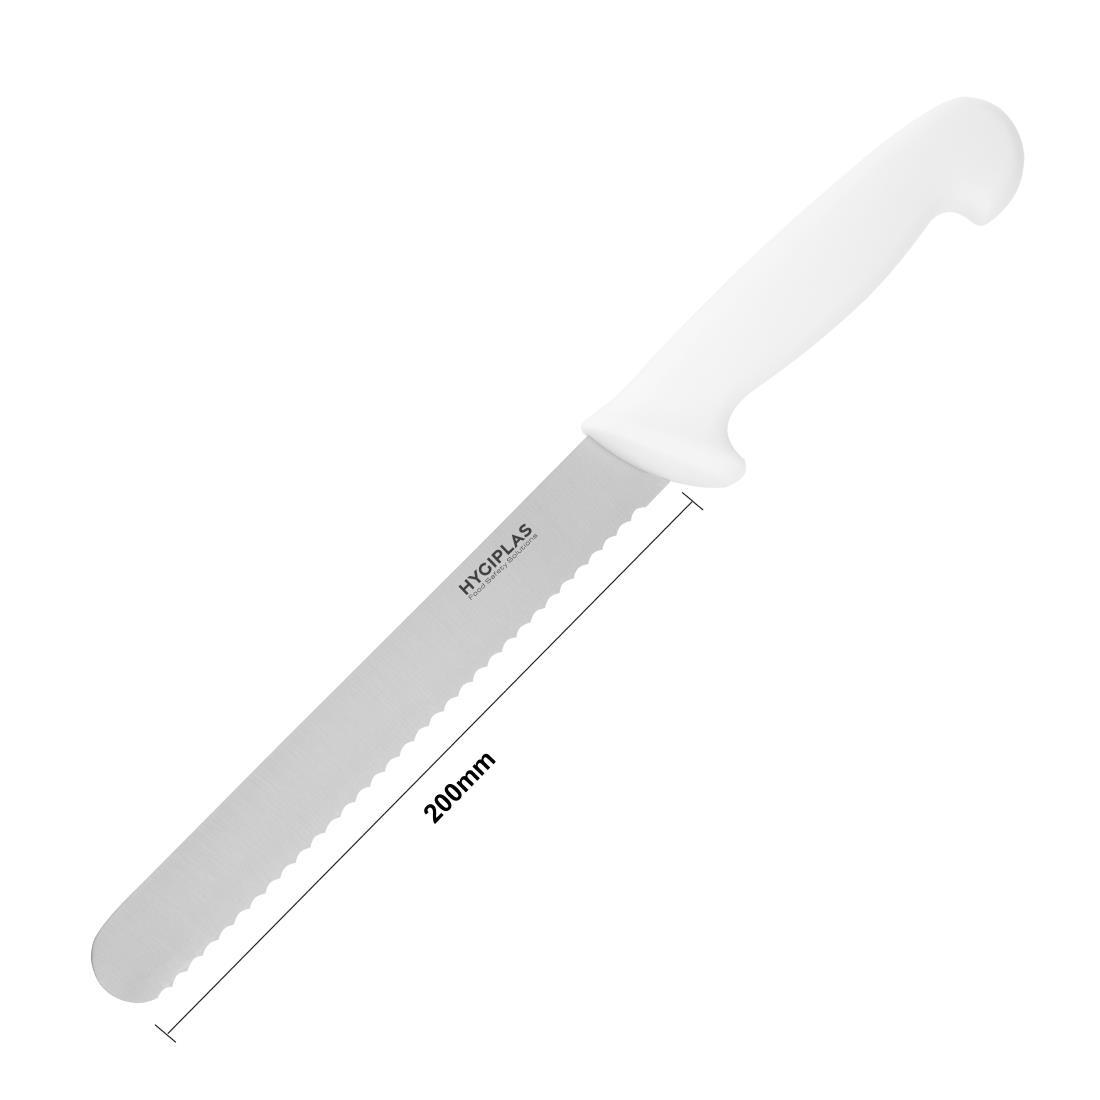 Hygiplas Bread Knife White 20.5cm - C882  - 5